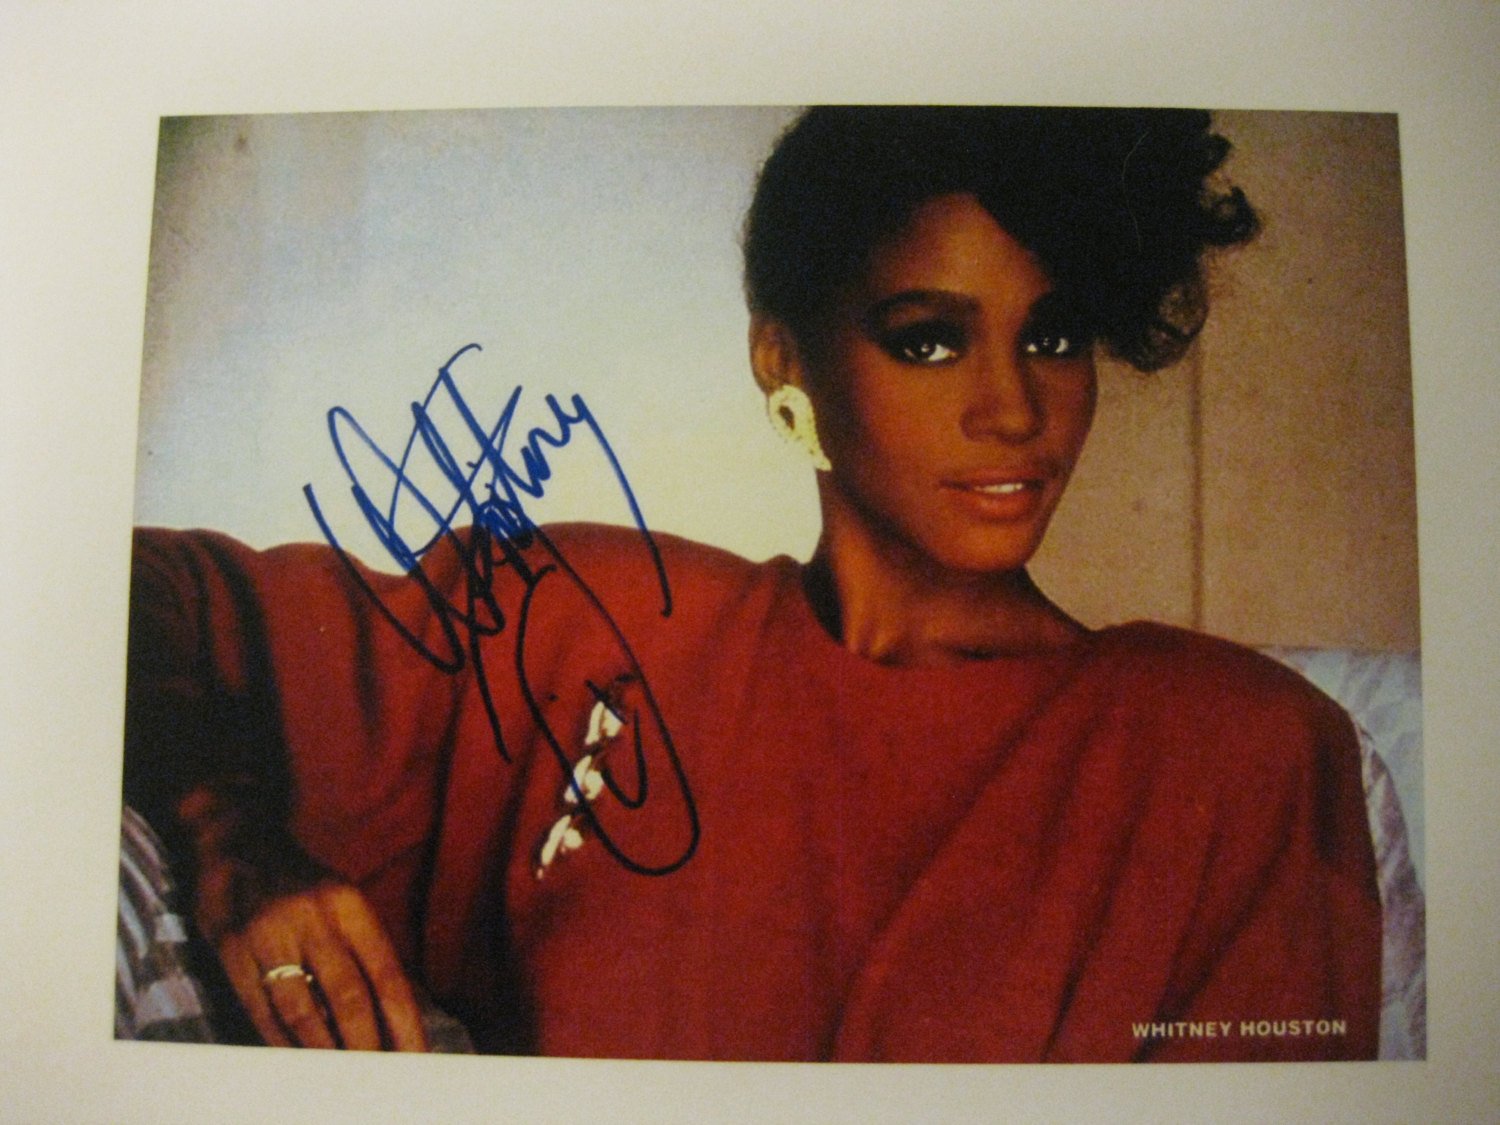 Whitney Houston Signed Photo 8x10 Rare New Picture Autograph Signature mini post - $9.99